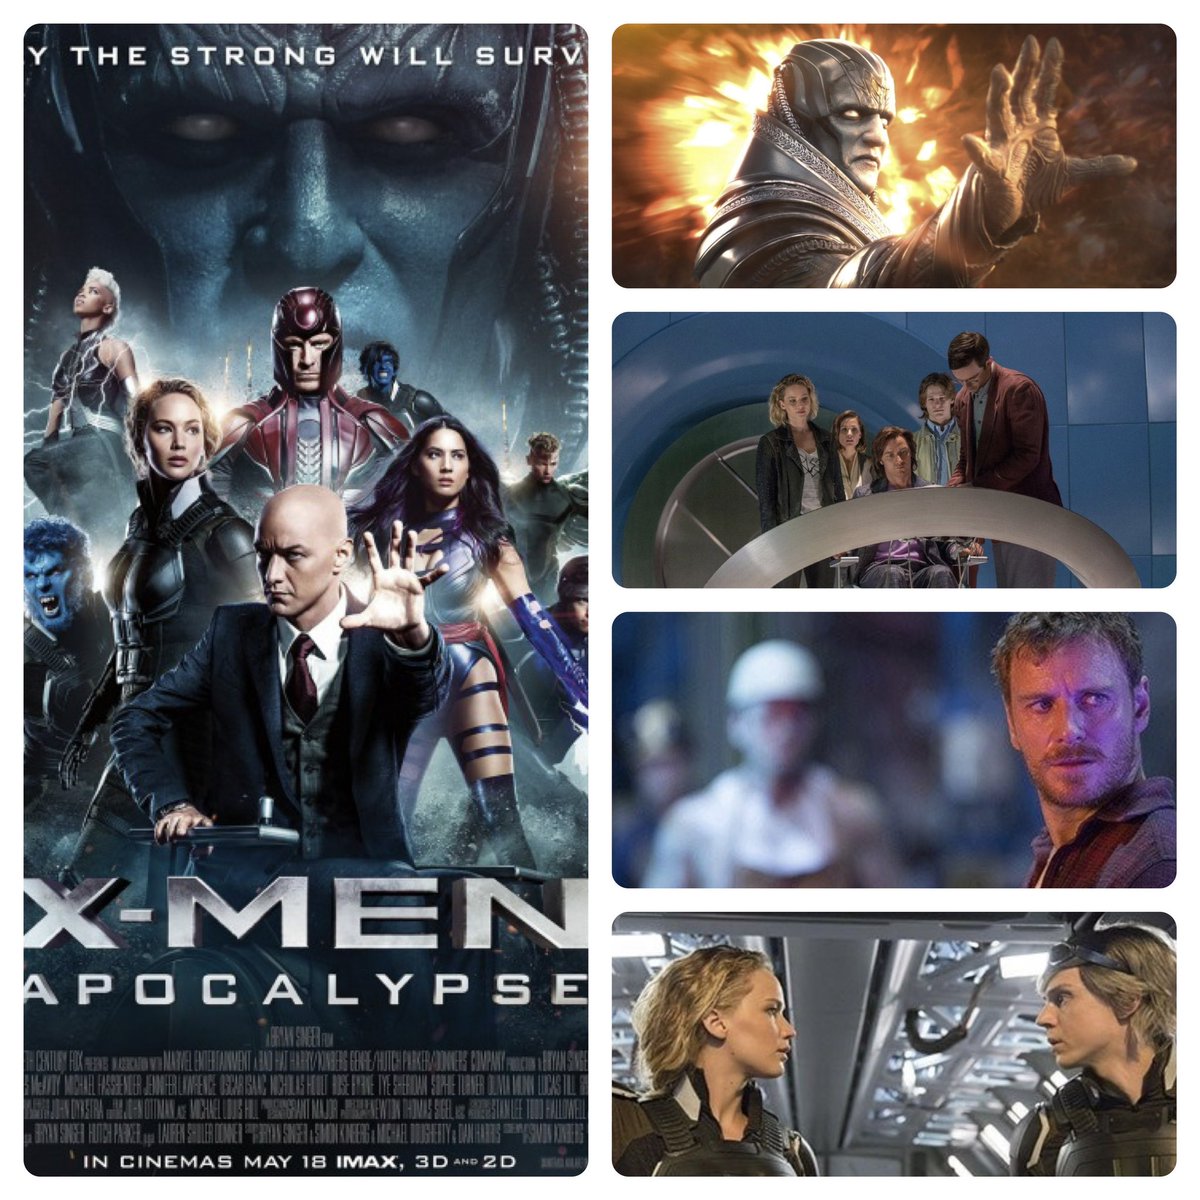 X-Men: Apocalypse celebrates it's 7th anniversary today
#xmenapocalypse #xmenmovie #xmen #xmenfan #marvelxmen #professorx #magneto #mystique #ensabahnur #xmenbeast #quicksilver #xmencyclops #jeangrey #psylocke #nightcrawler #xmenstorm #xmenangel #marvelentertainment #marvelmovie